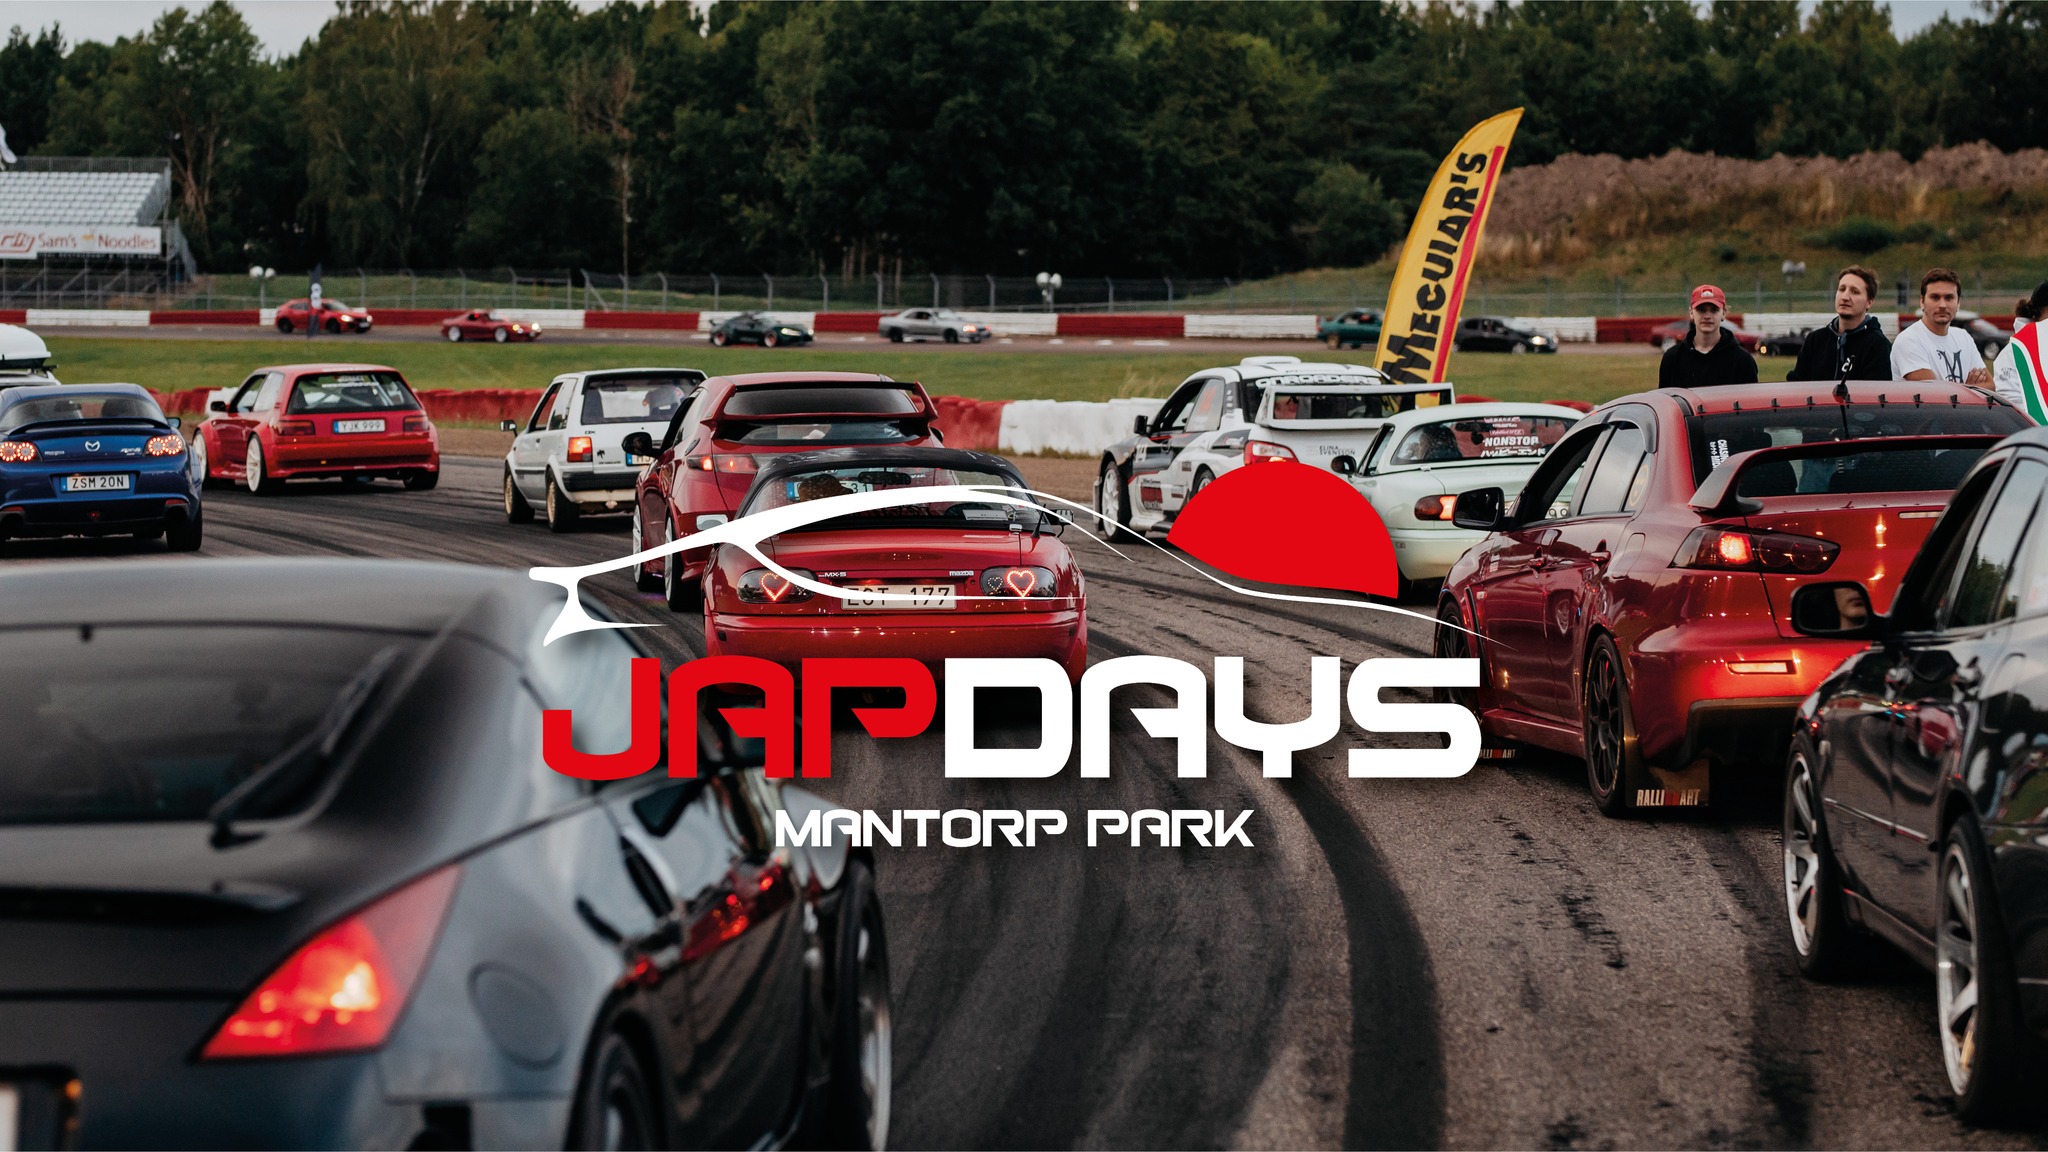 Japdays Mantorp Park - Racelens